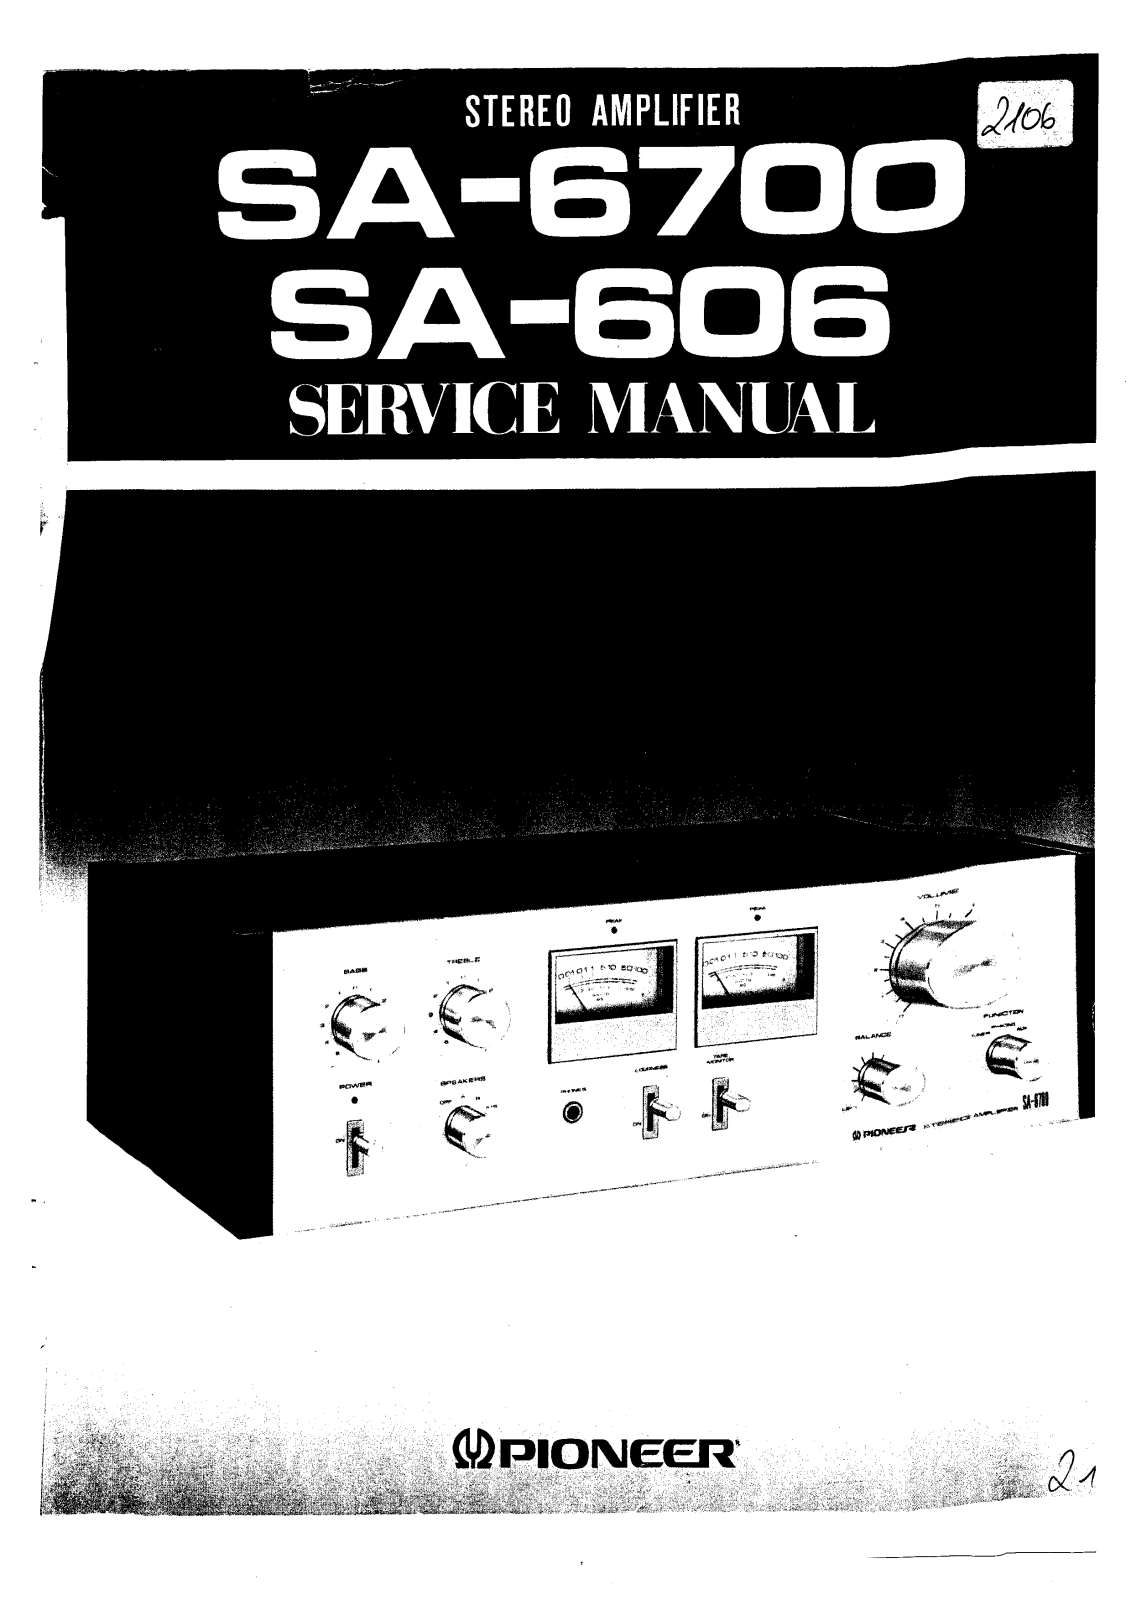 Pioneer SA-606, SA-6700 Service manual